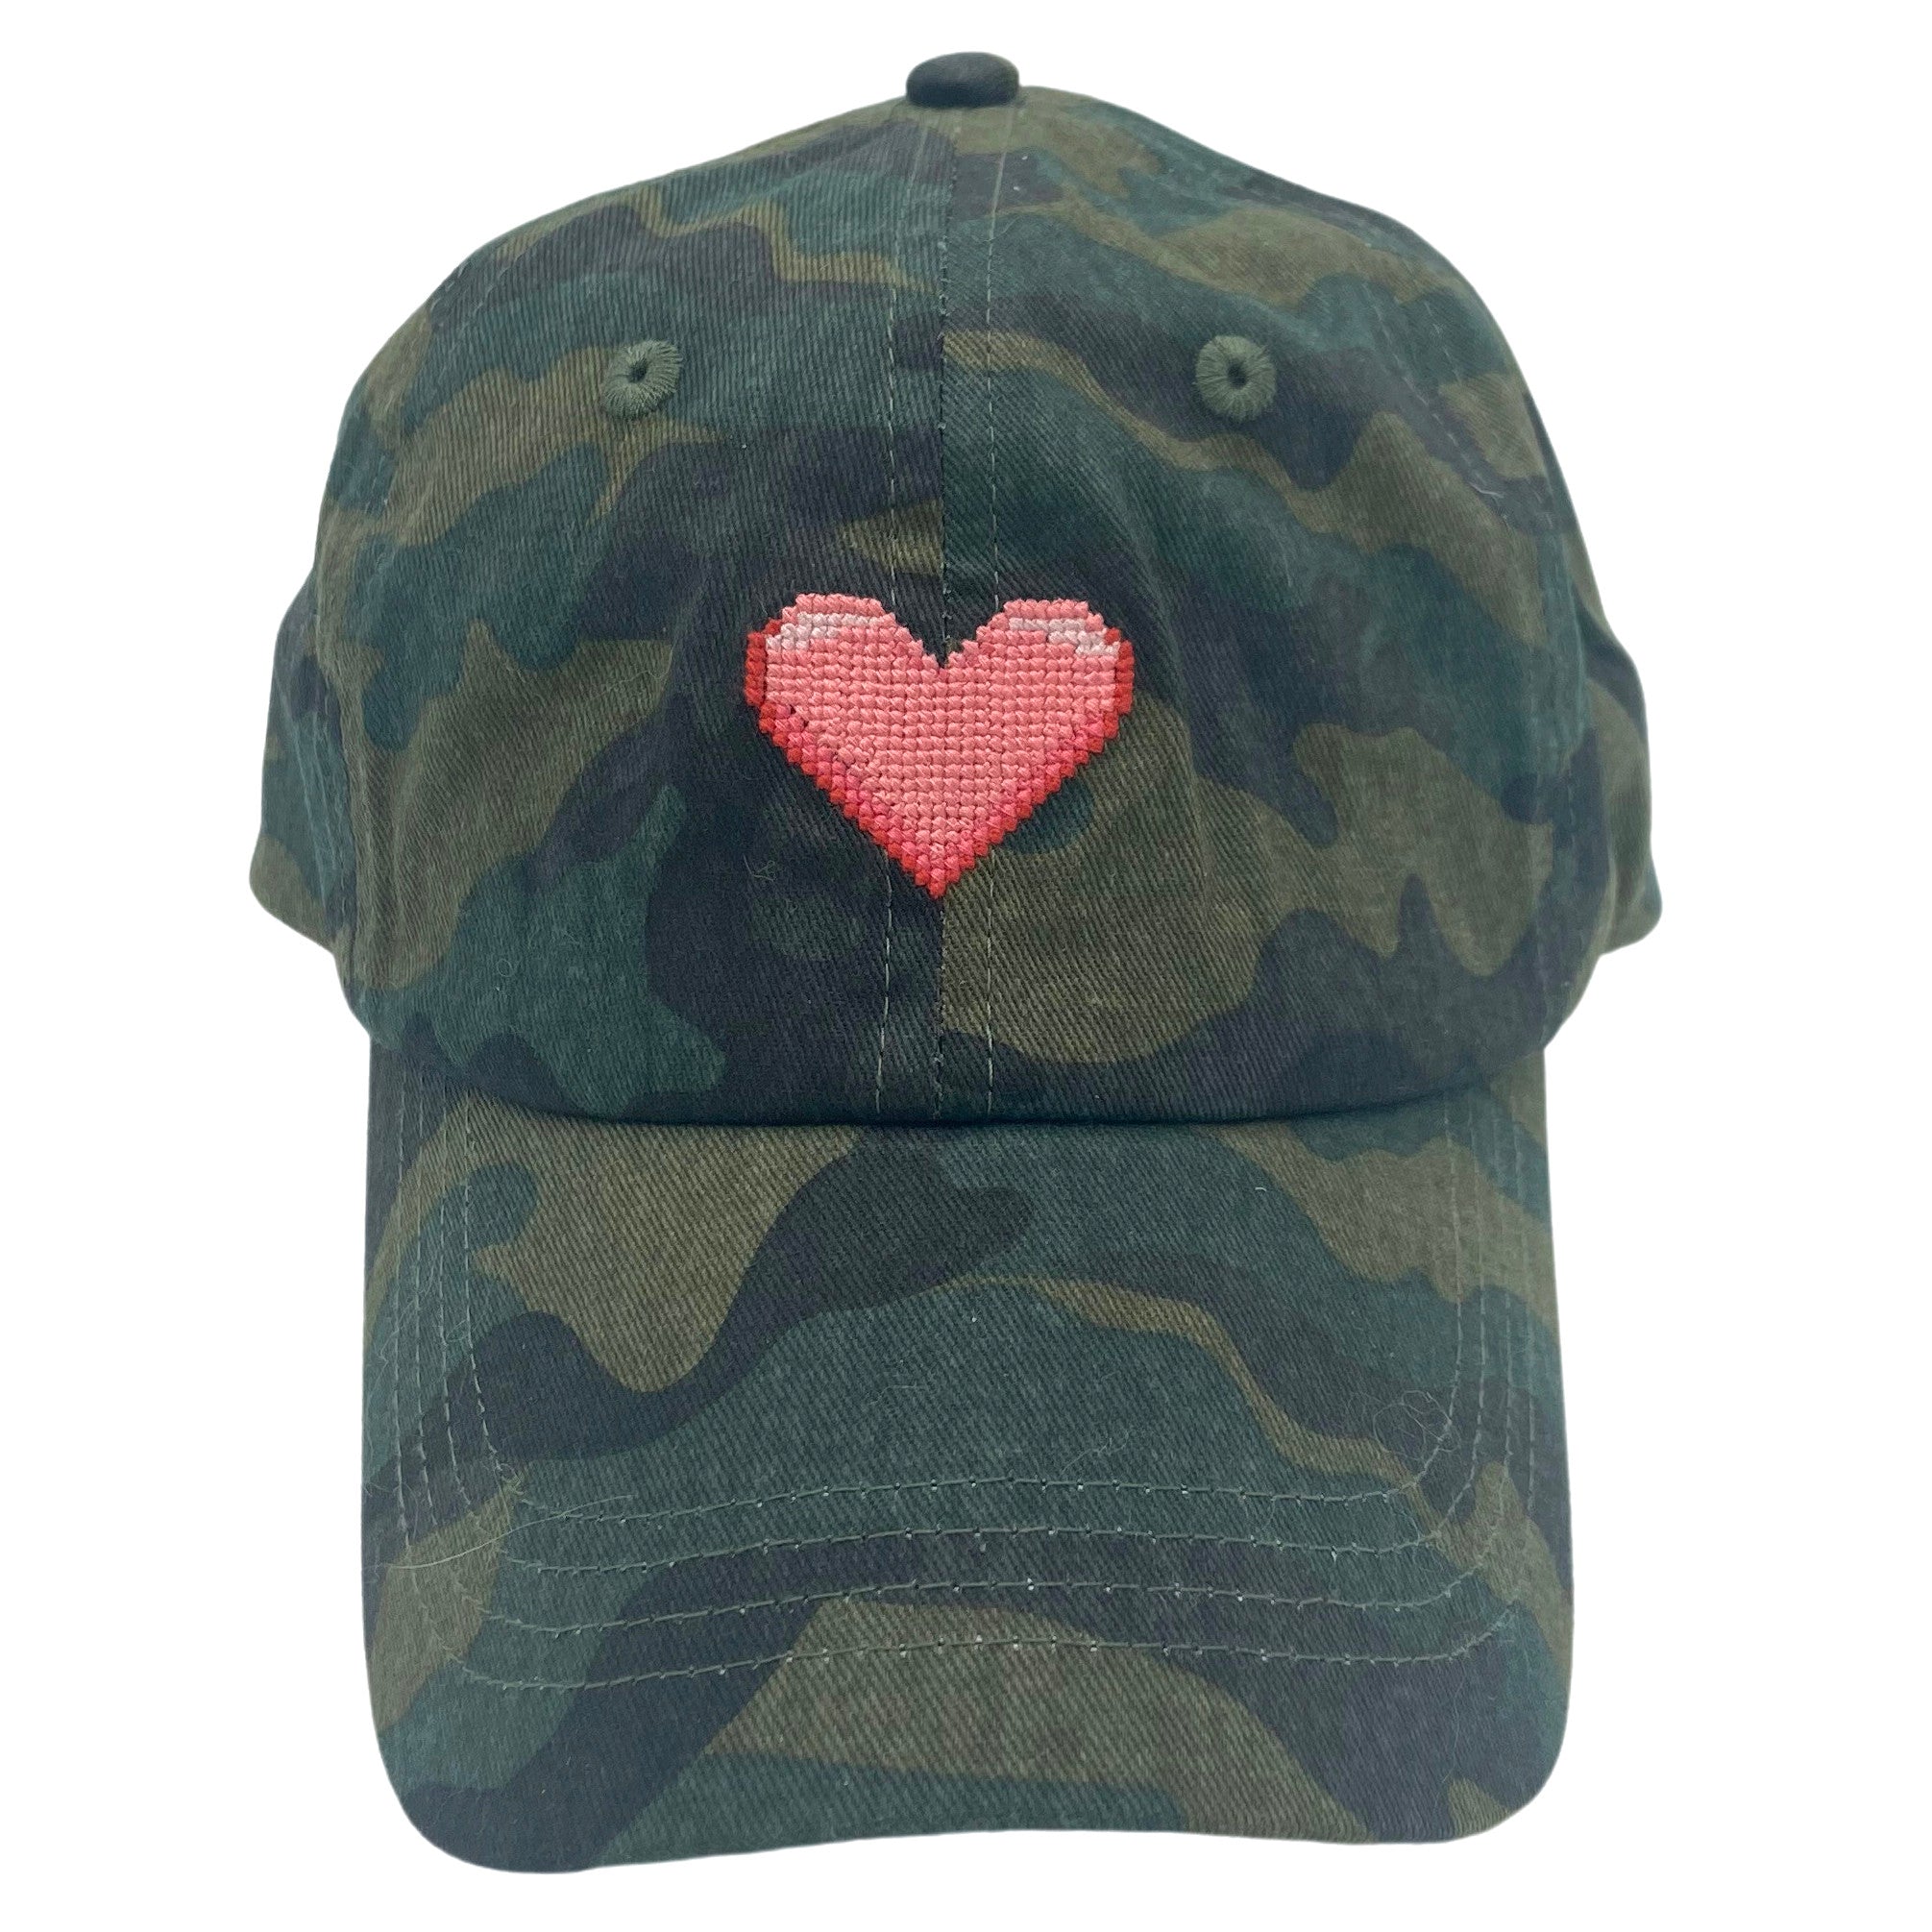 heart on camo hat